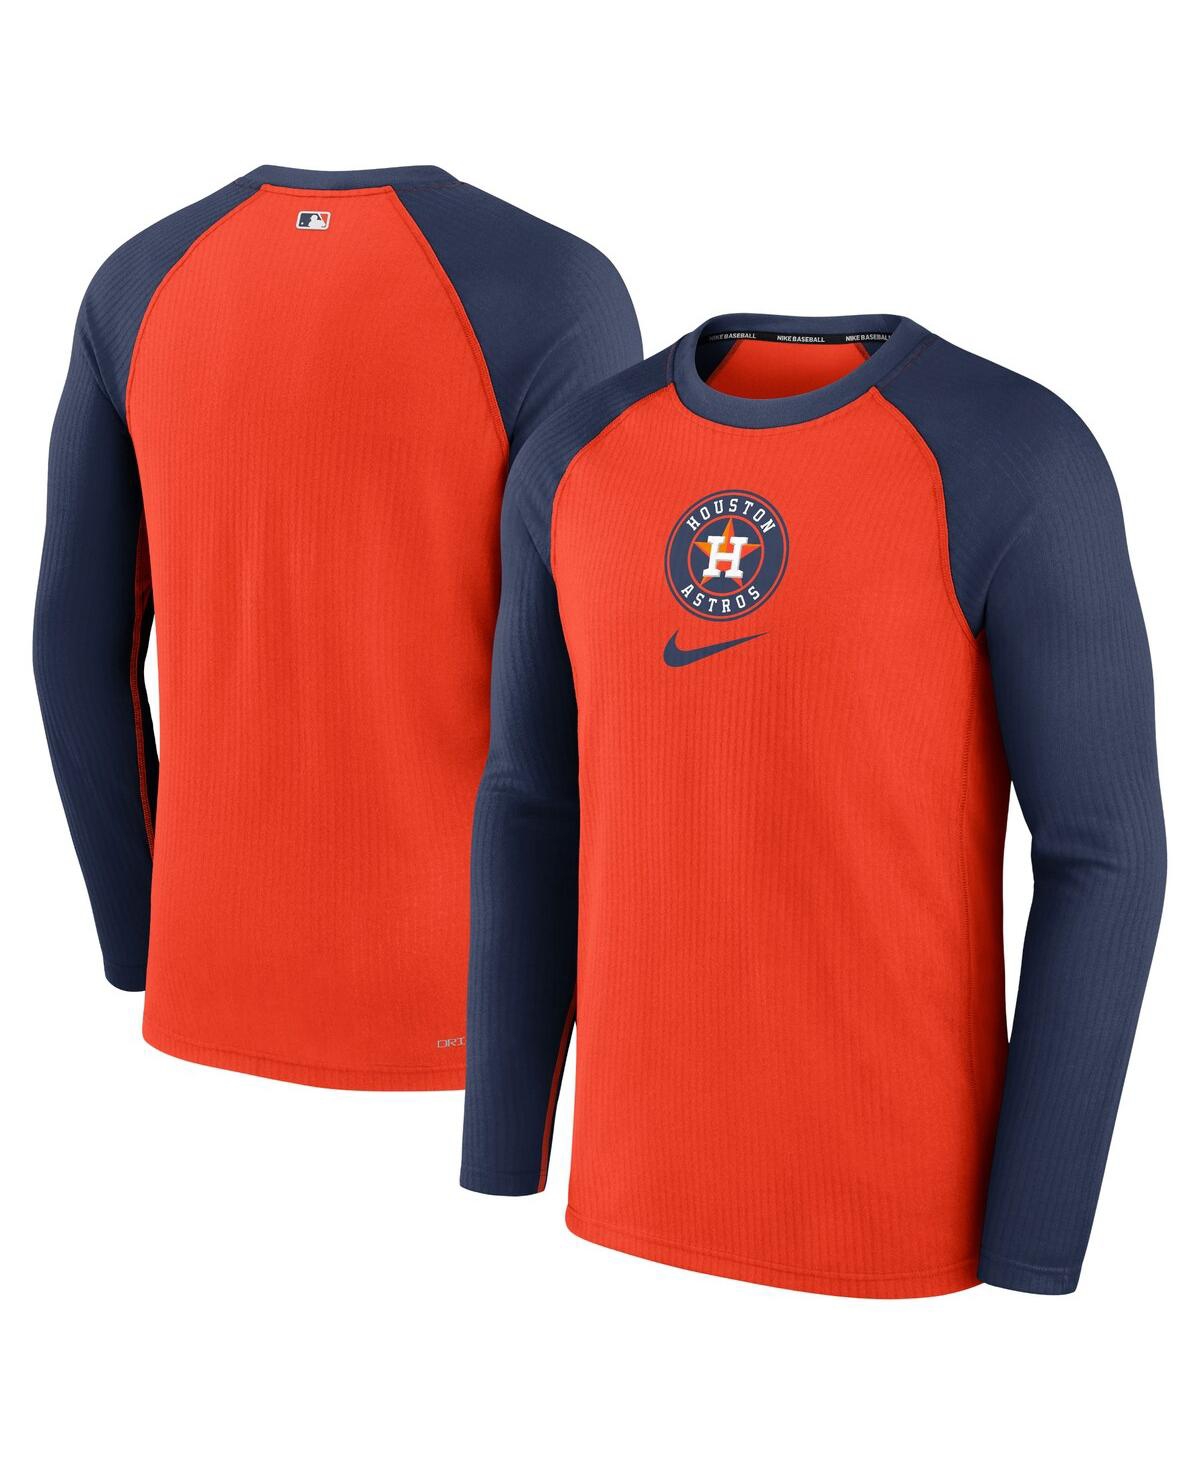 Men's Nike Orange Houston Astros Authentic Collection Game Raglan Performance Long Sleeve T-Shirt